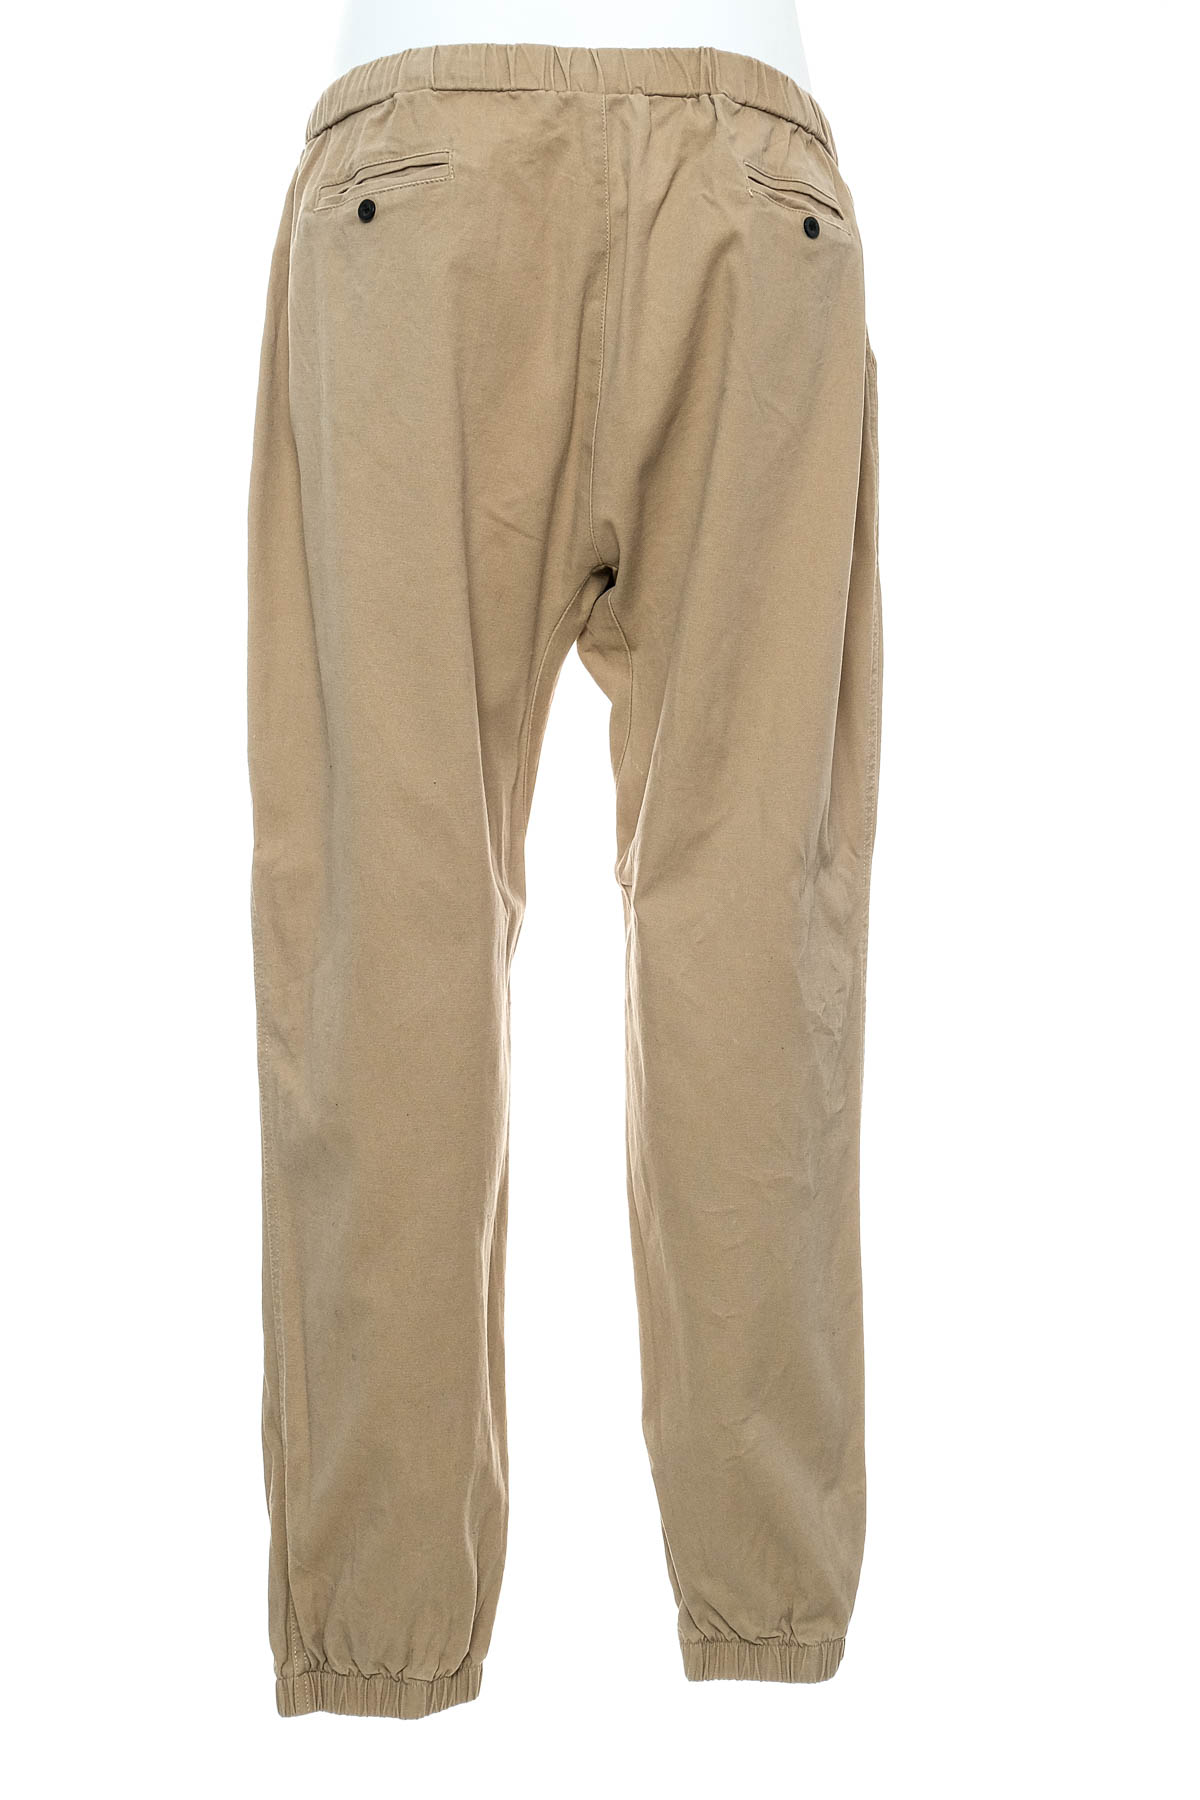 Men's trousers - Yidarton - 1